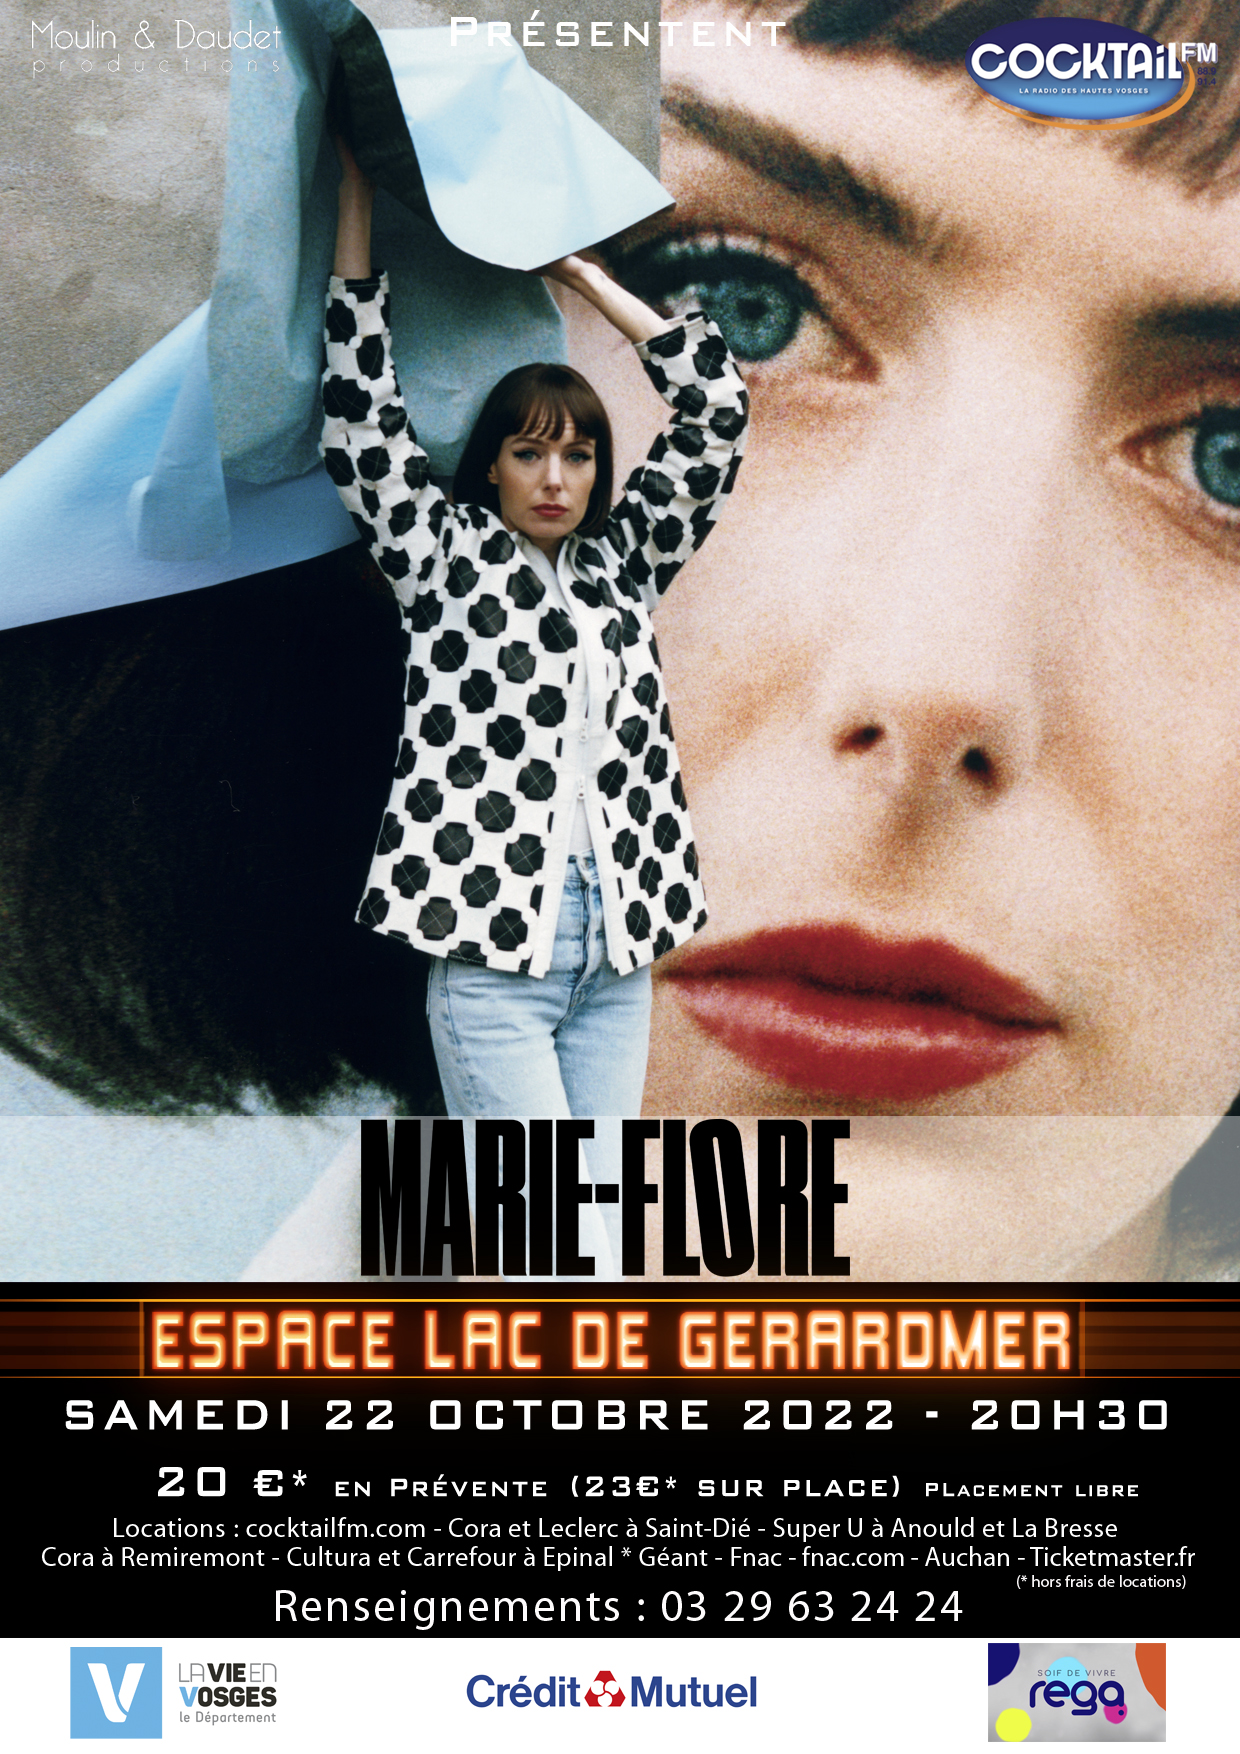 MARIE FLORE 22 OCTOBRE 2022 ESPACE LAC DE GERARDMER